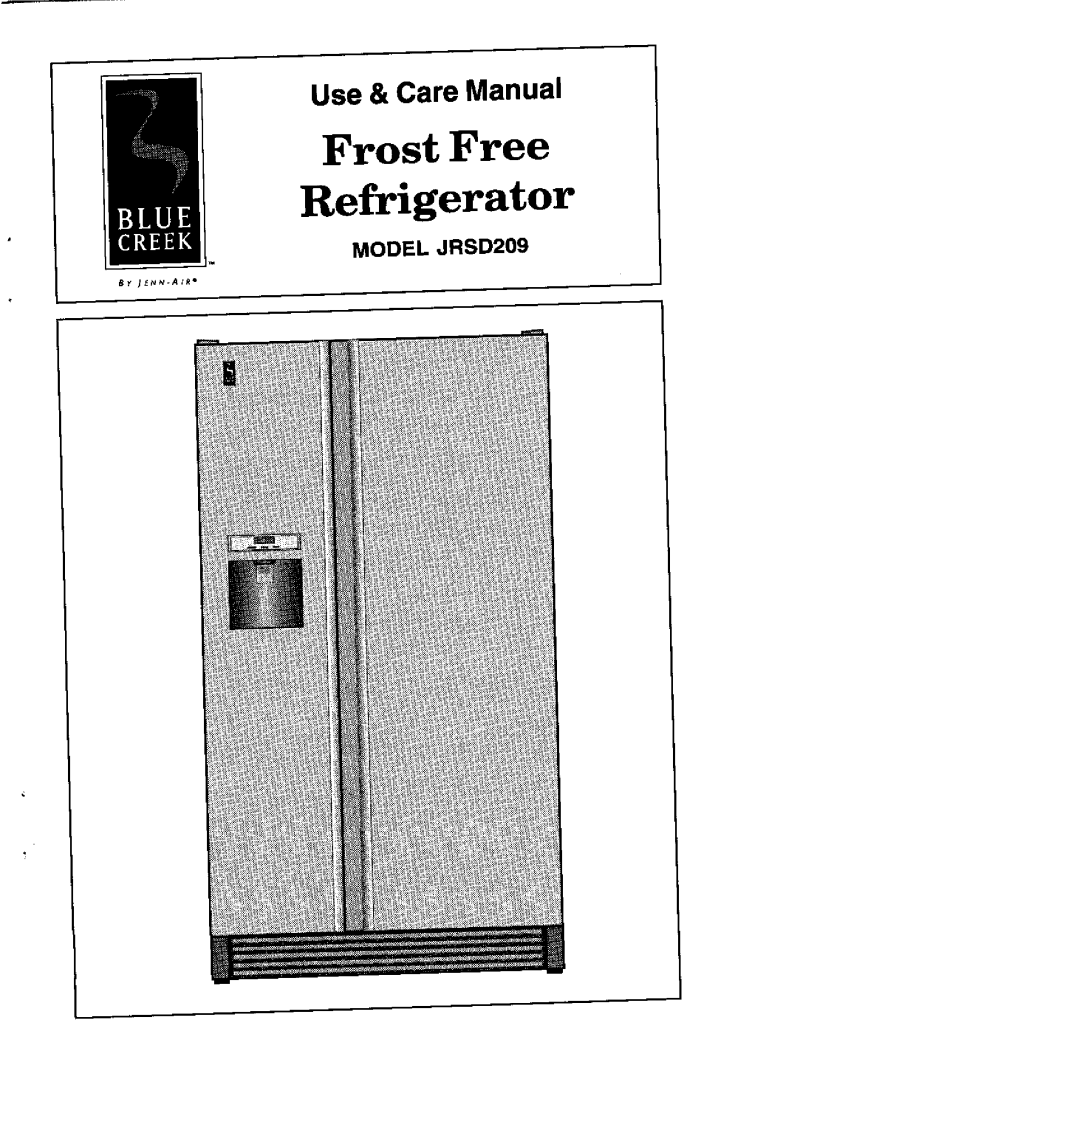 Whirlpool JRSD209A manual Frost Free, Refrigerator, Use & Care Manual, MODEL JRSD209, 8y J£NN.AIR 